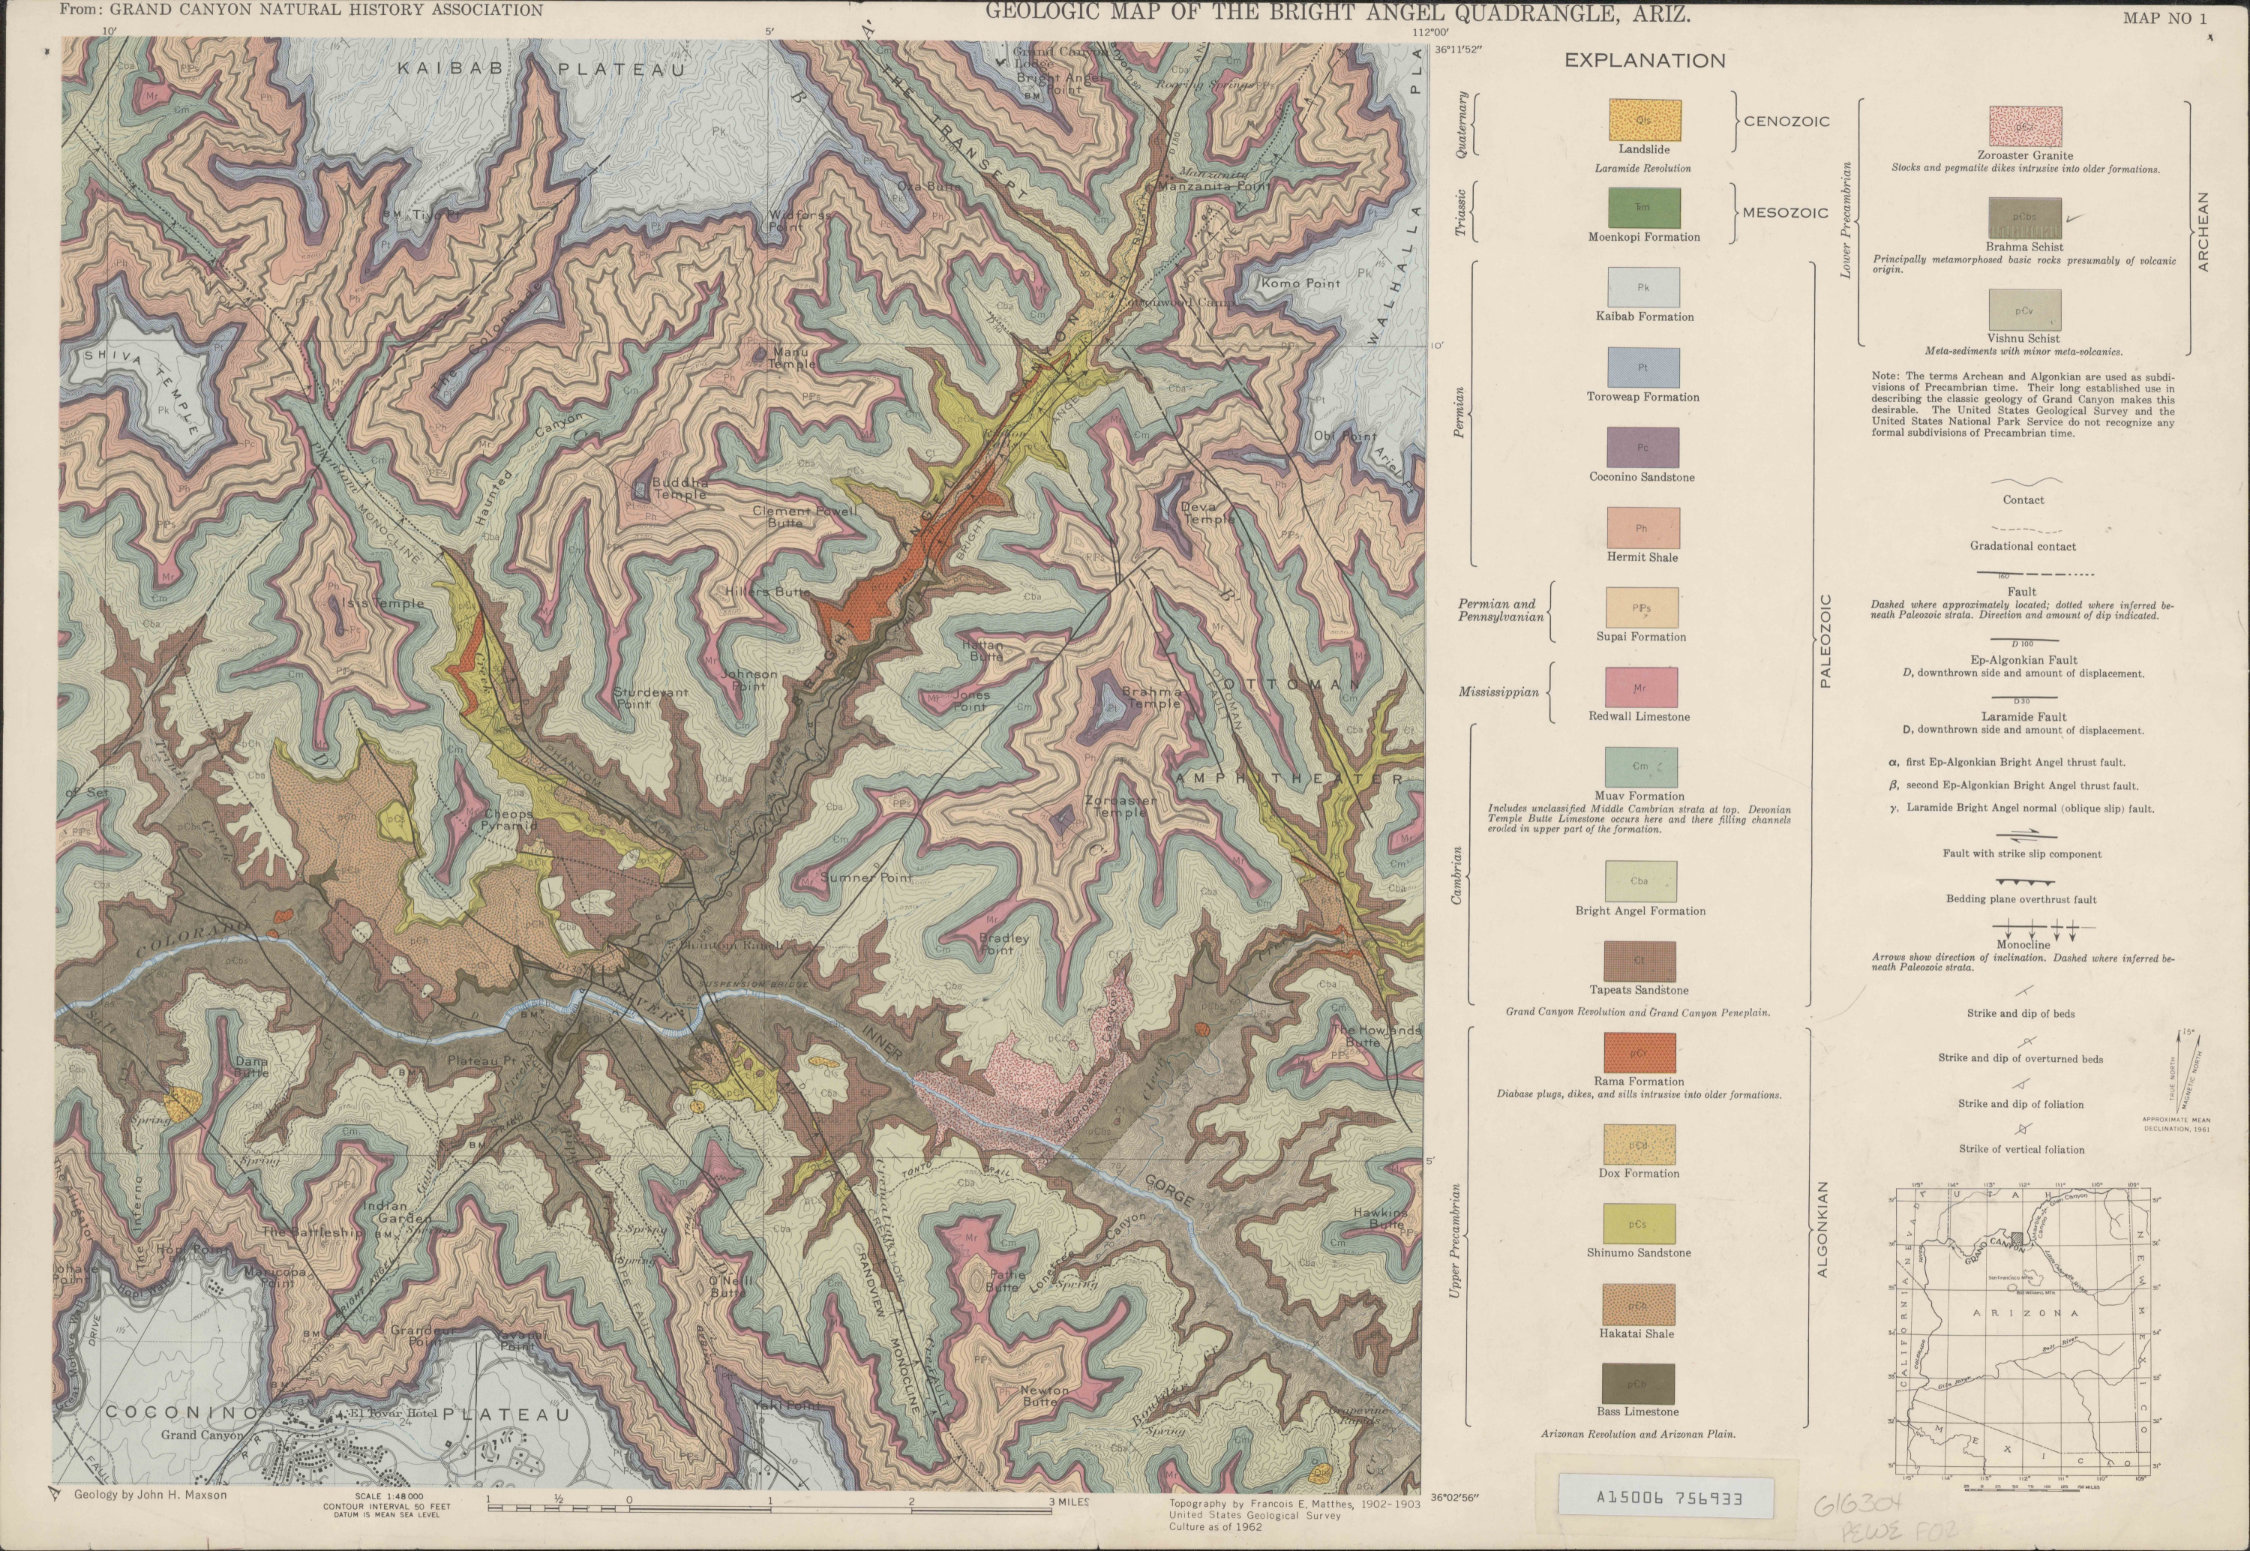 USGS-Geologic-Map-of-Bright-Angel-Quadrangle-Grand-Canyon-1962.jpg